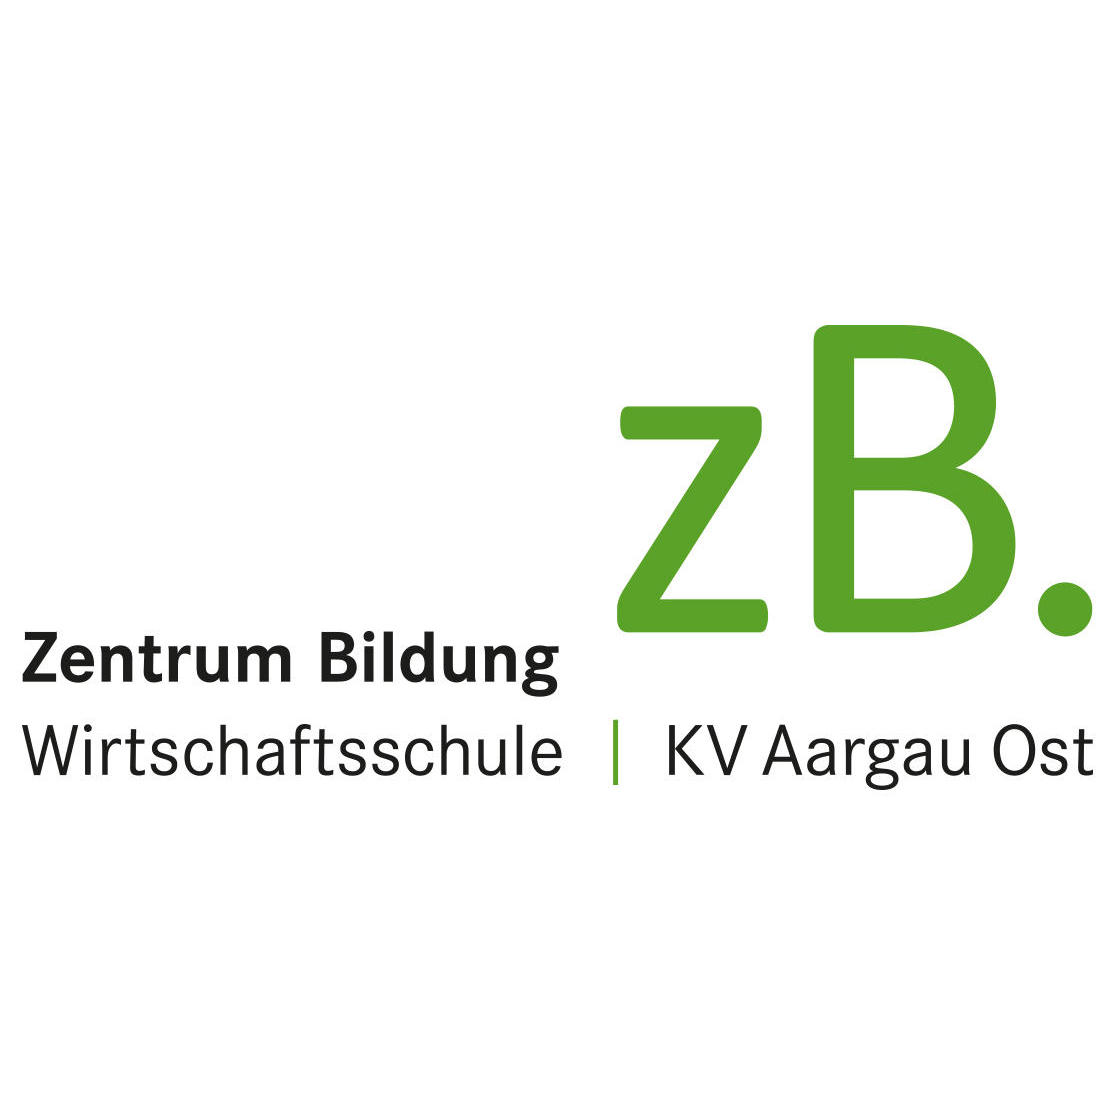 zB. Zentrum Bildung Logo